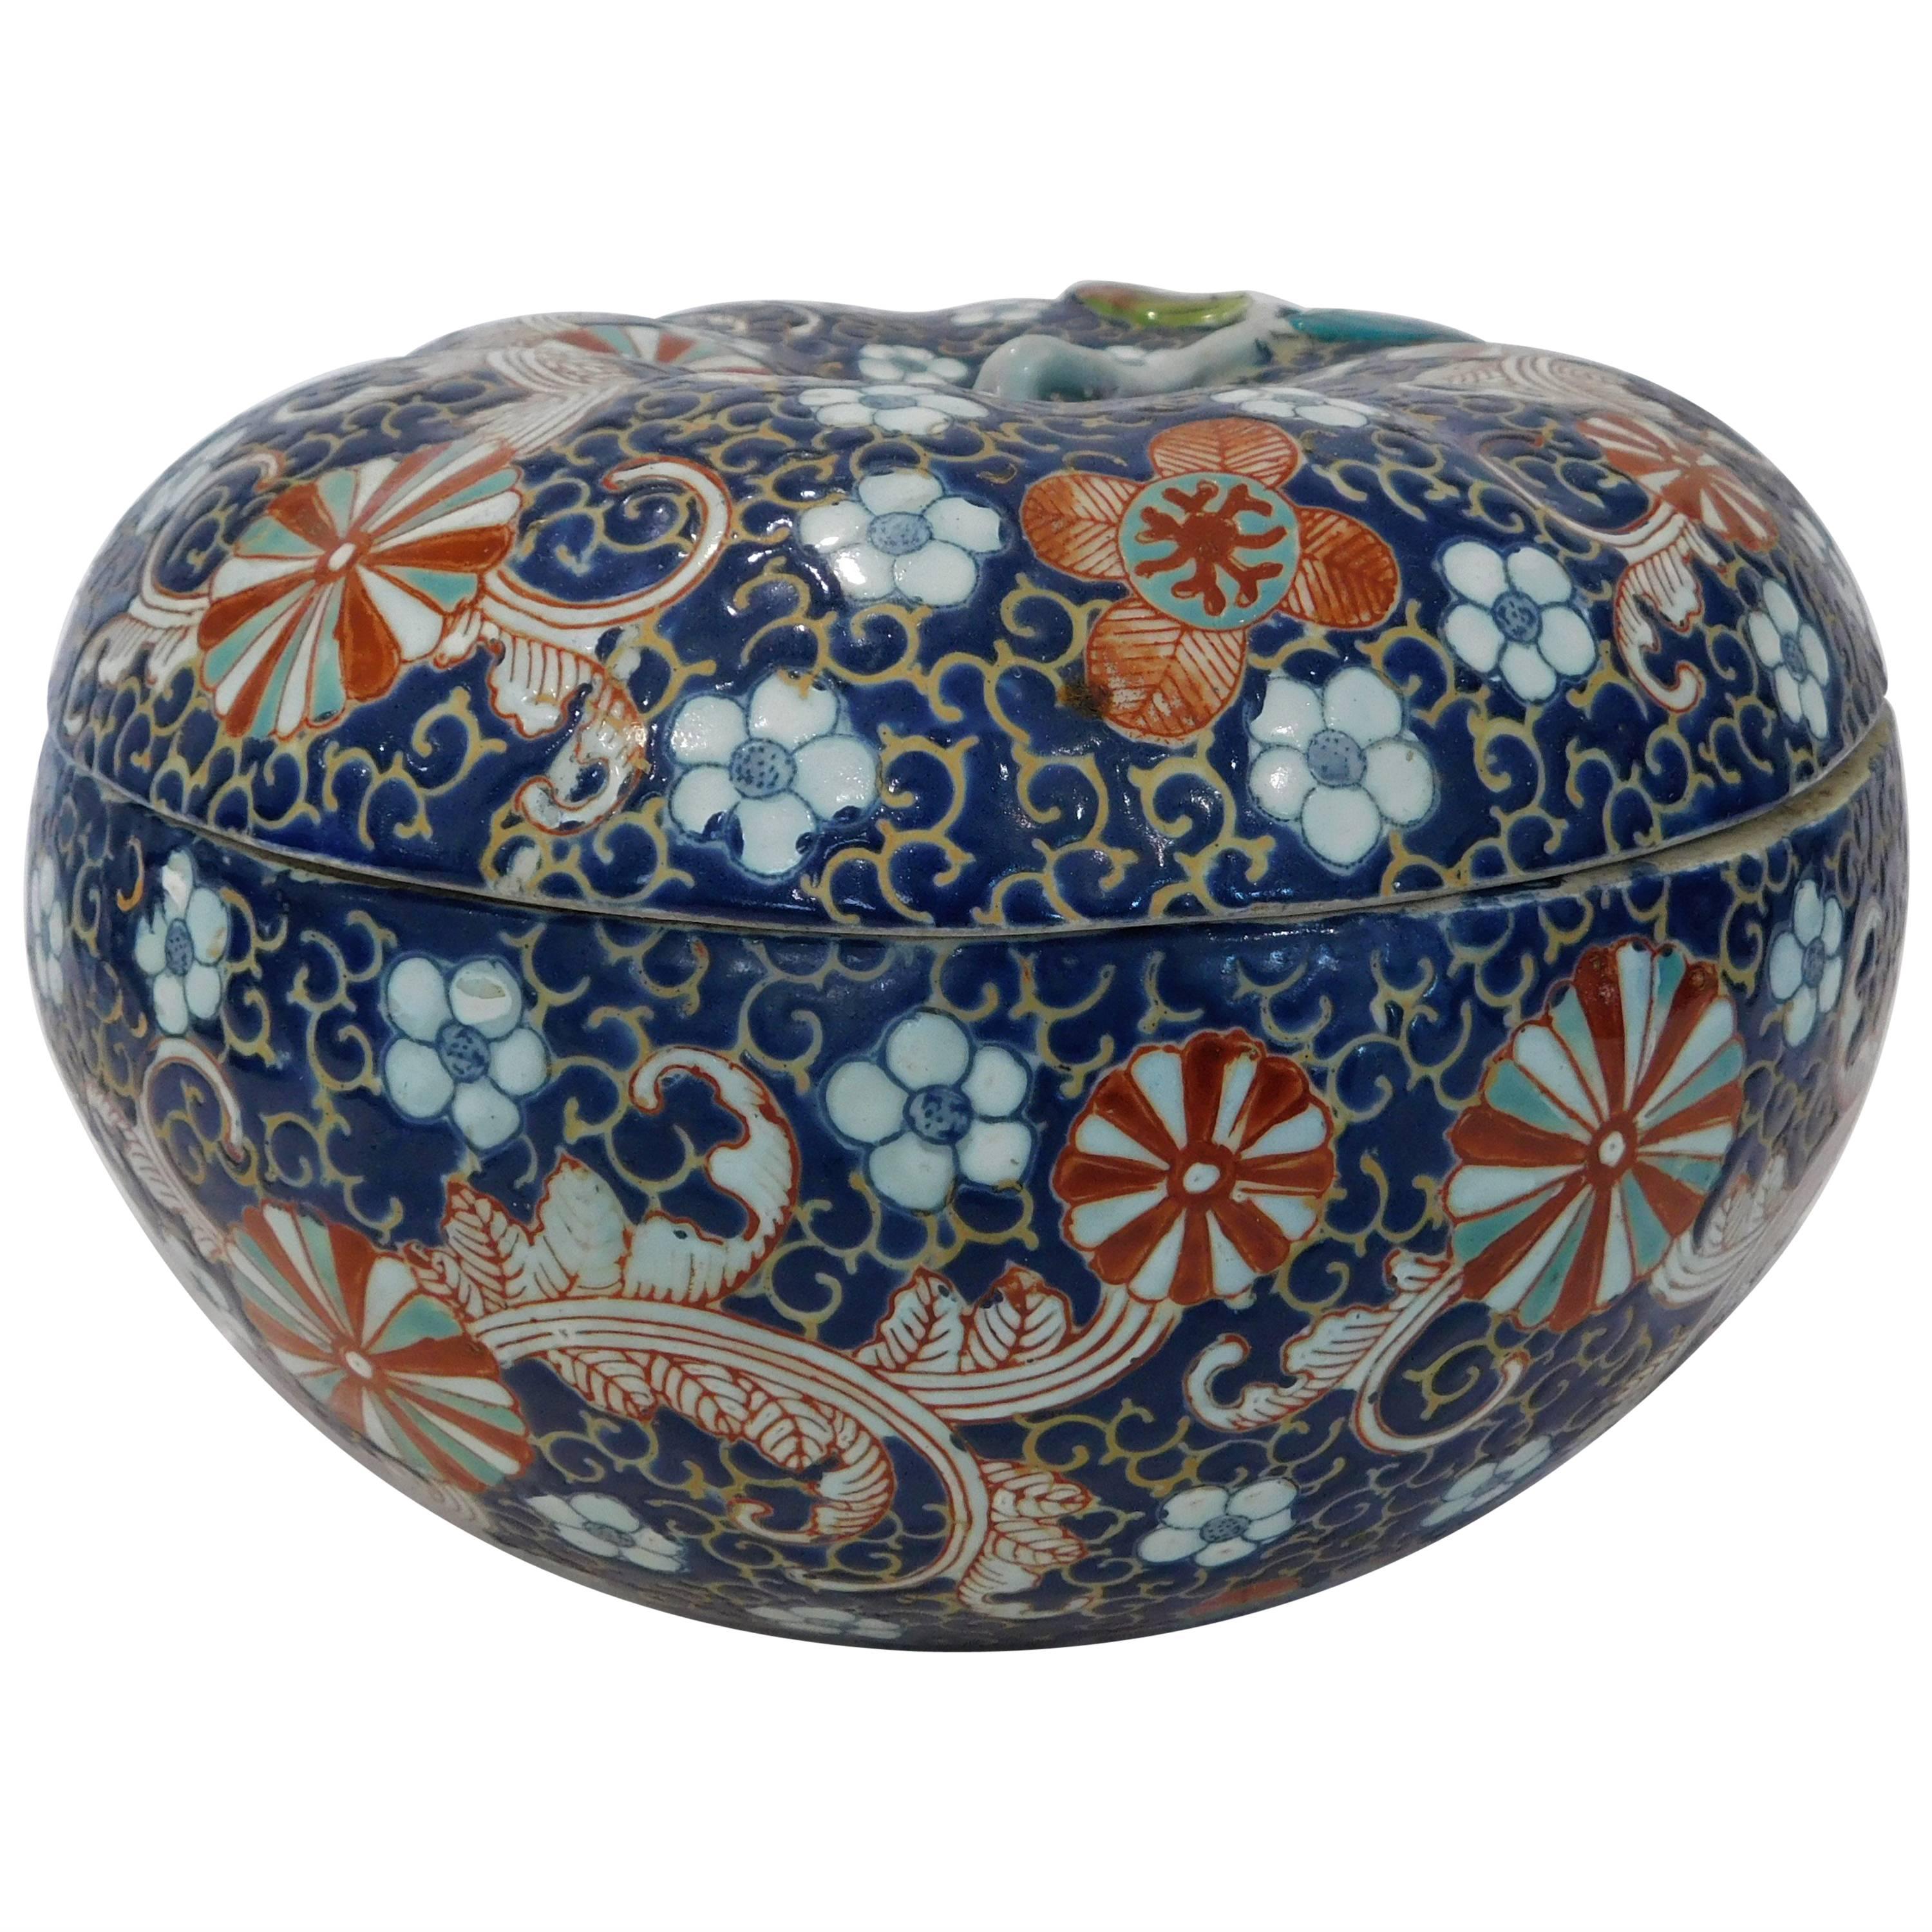 19th Century Japanese Porcelain Lidded Floral Bowl